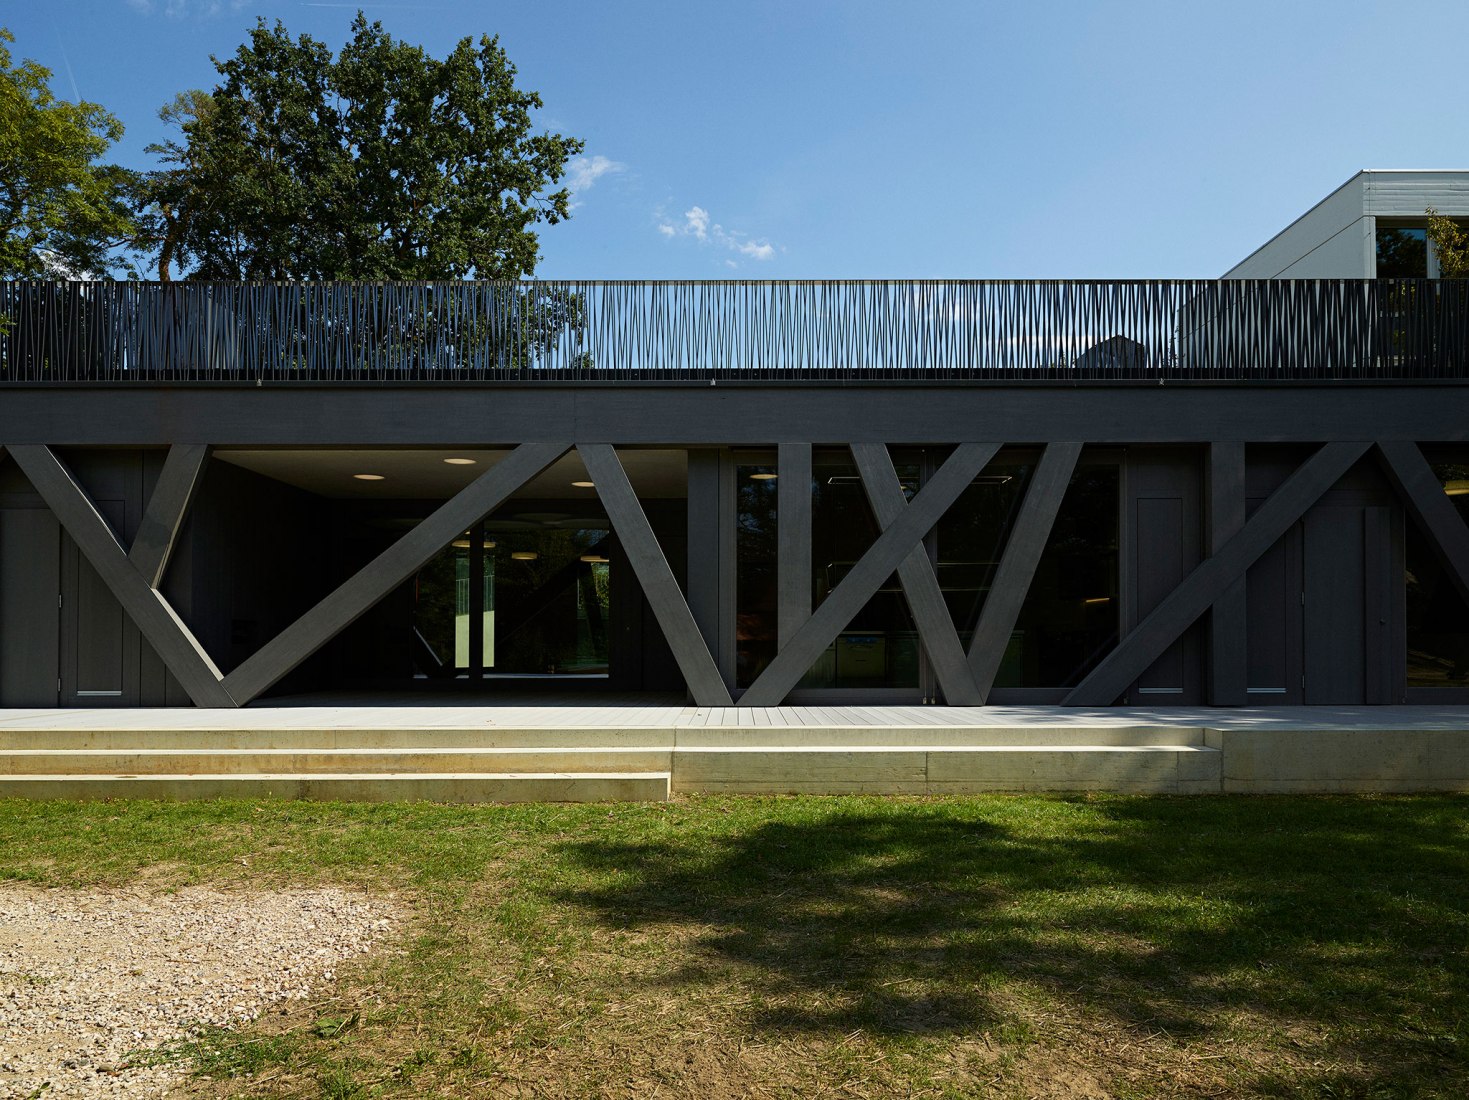 Recreational Community Center Le Lignon by Stendardo Menningen Architectes. Photograph by Federal Studio